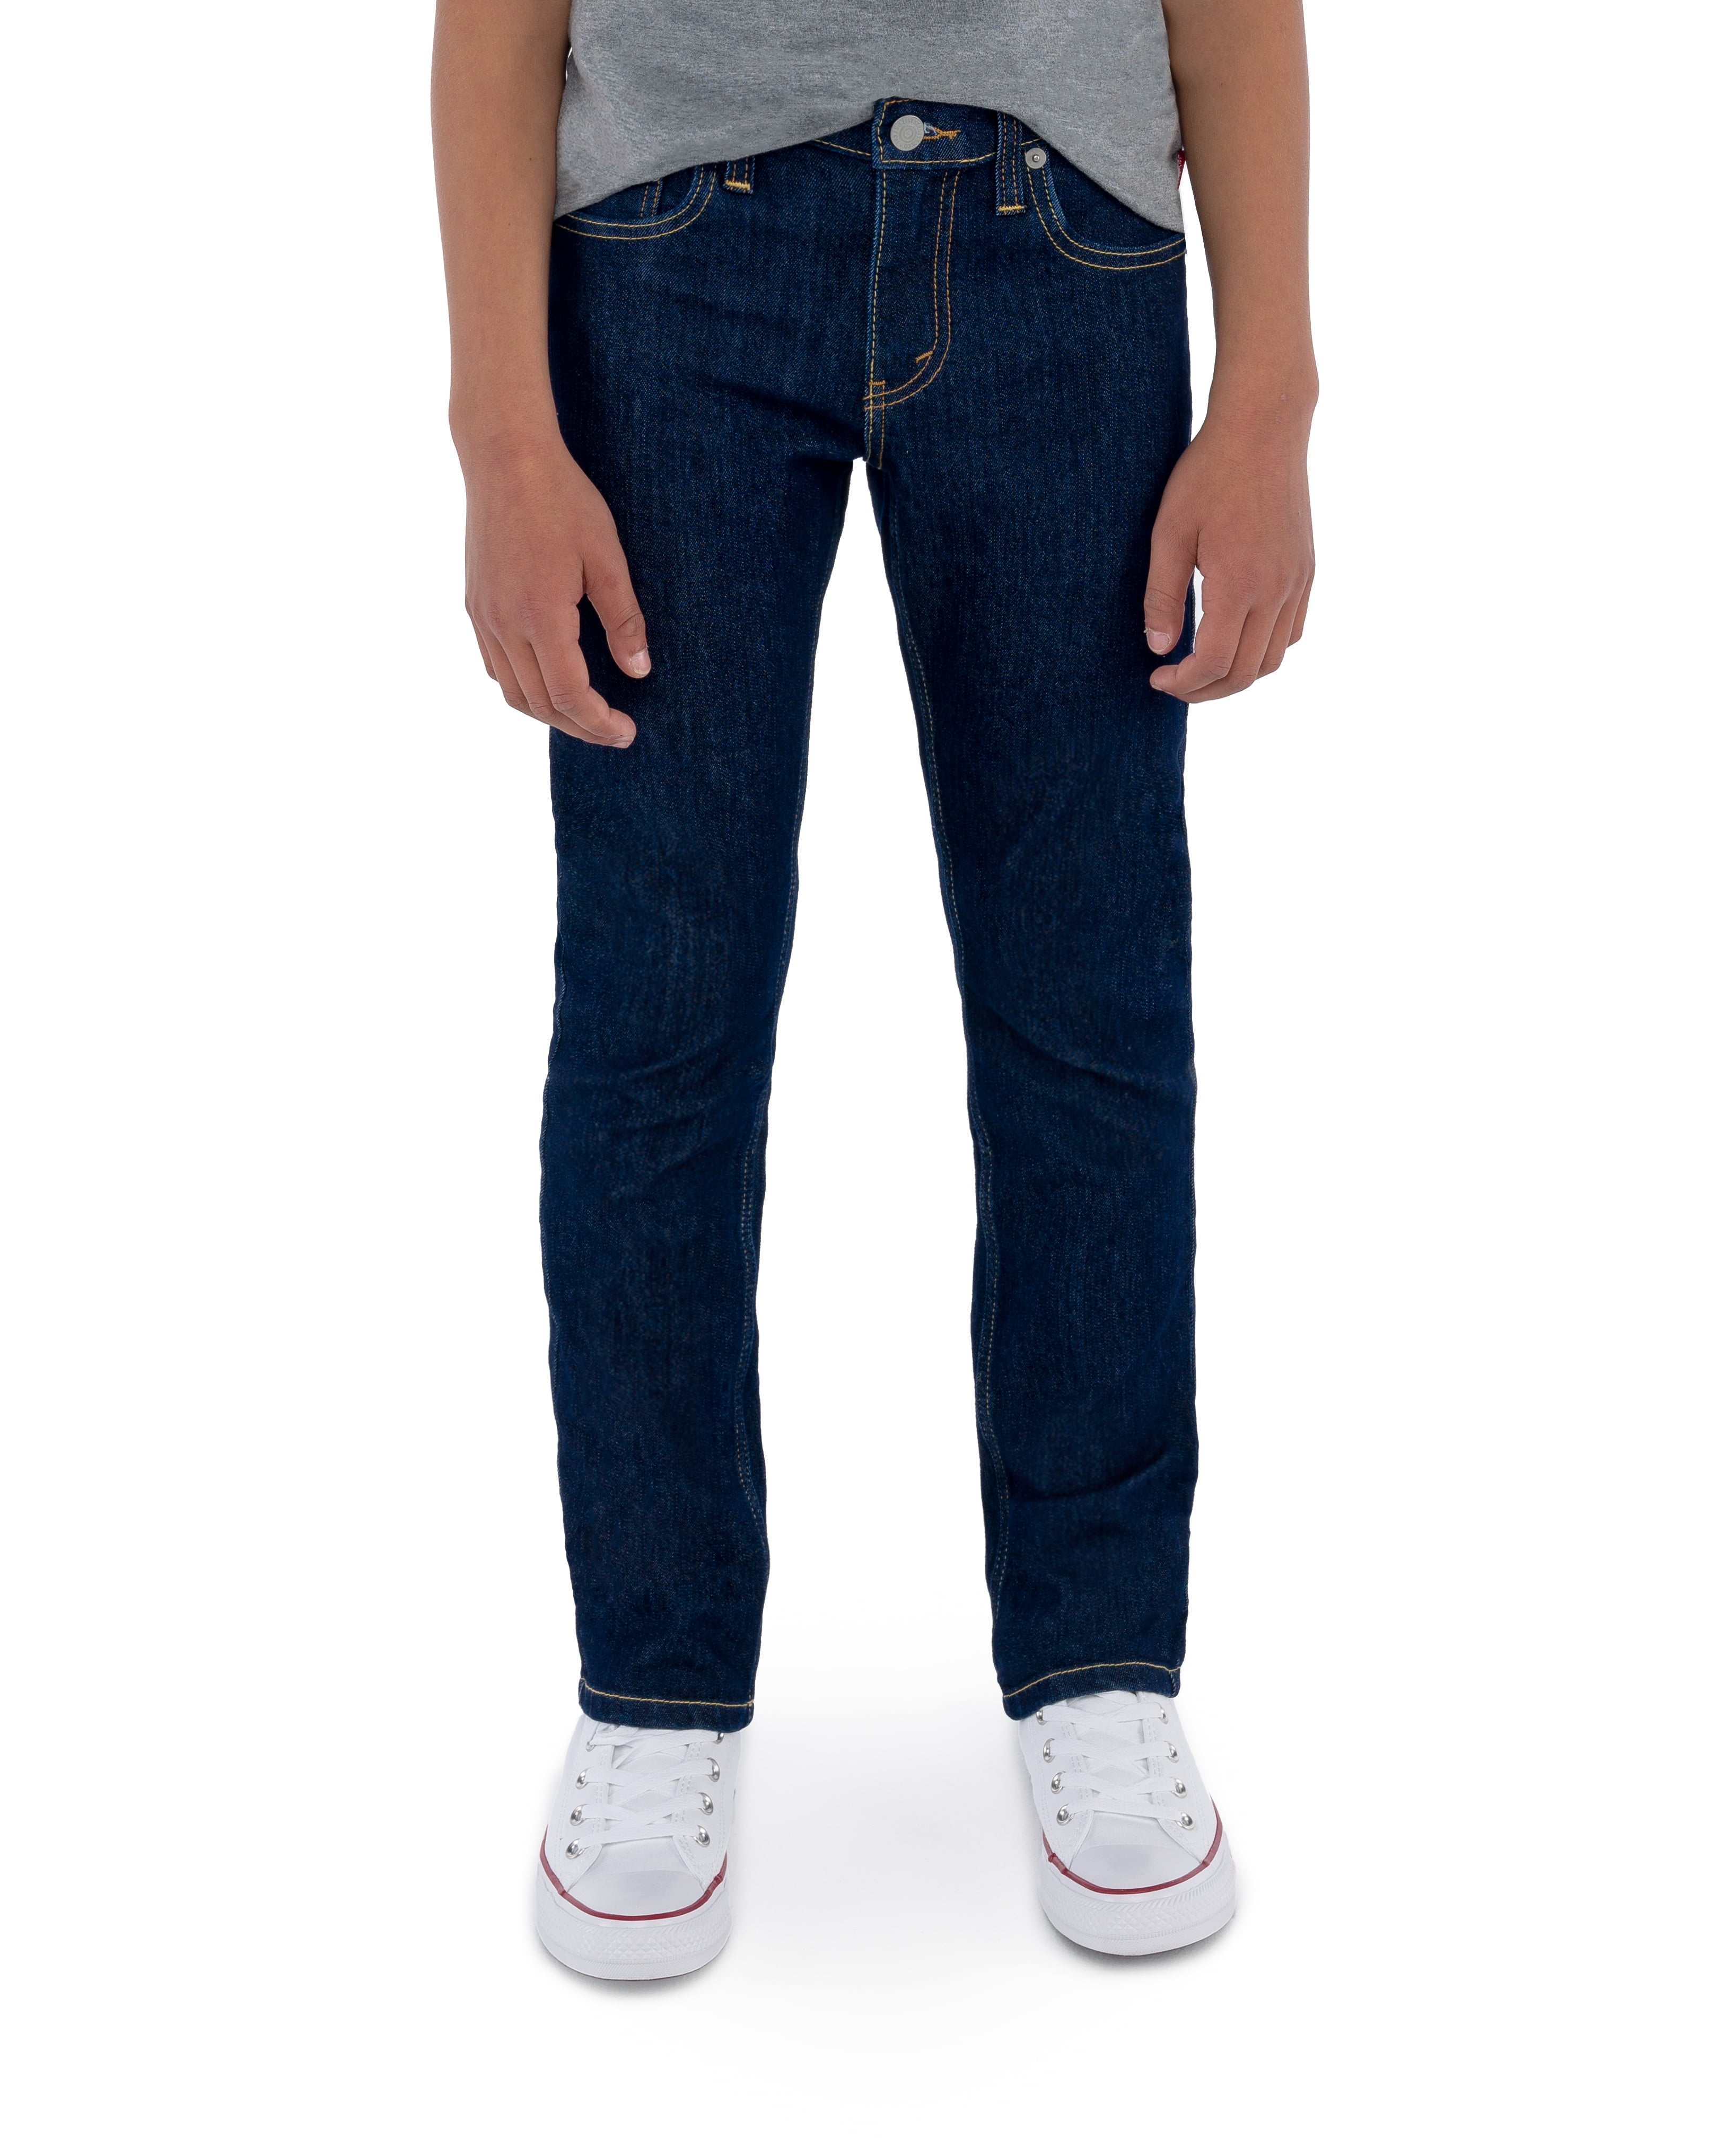 Levi's 511 Slim Fit  Boys Jeans Stretch Adjustable Waist Size 14 Reg 27x29 NEW